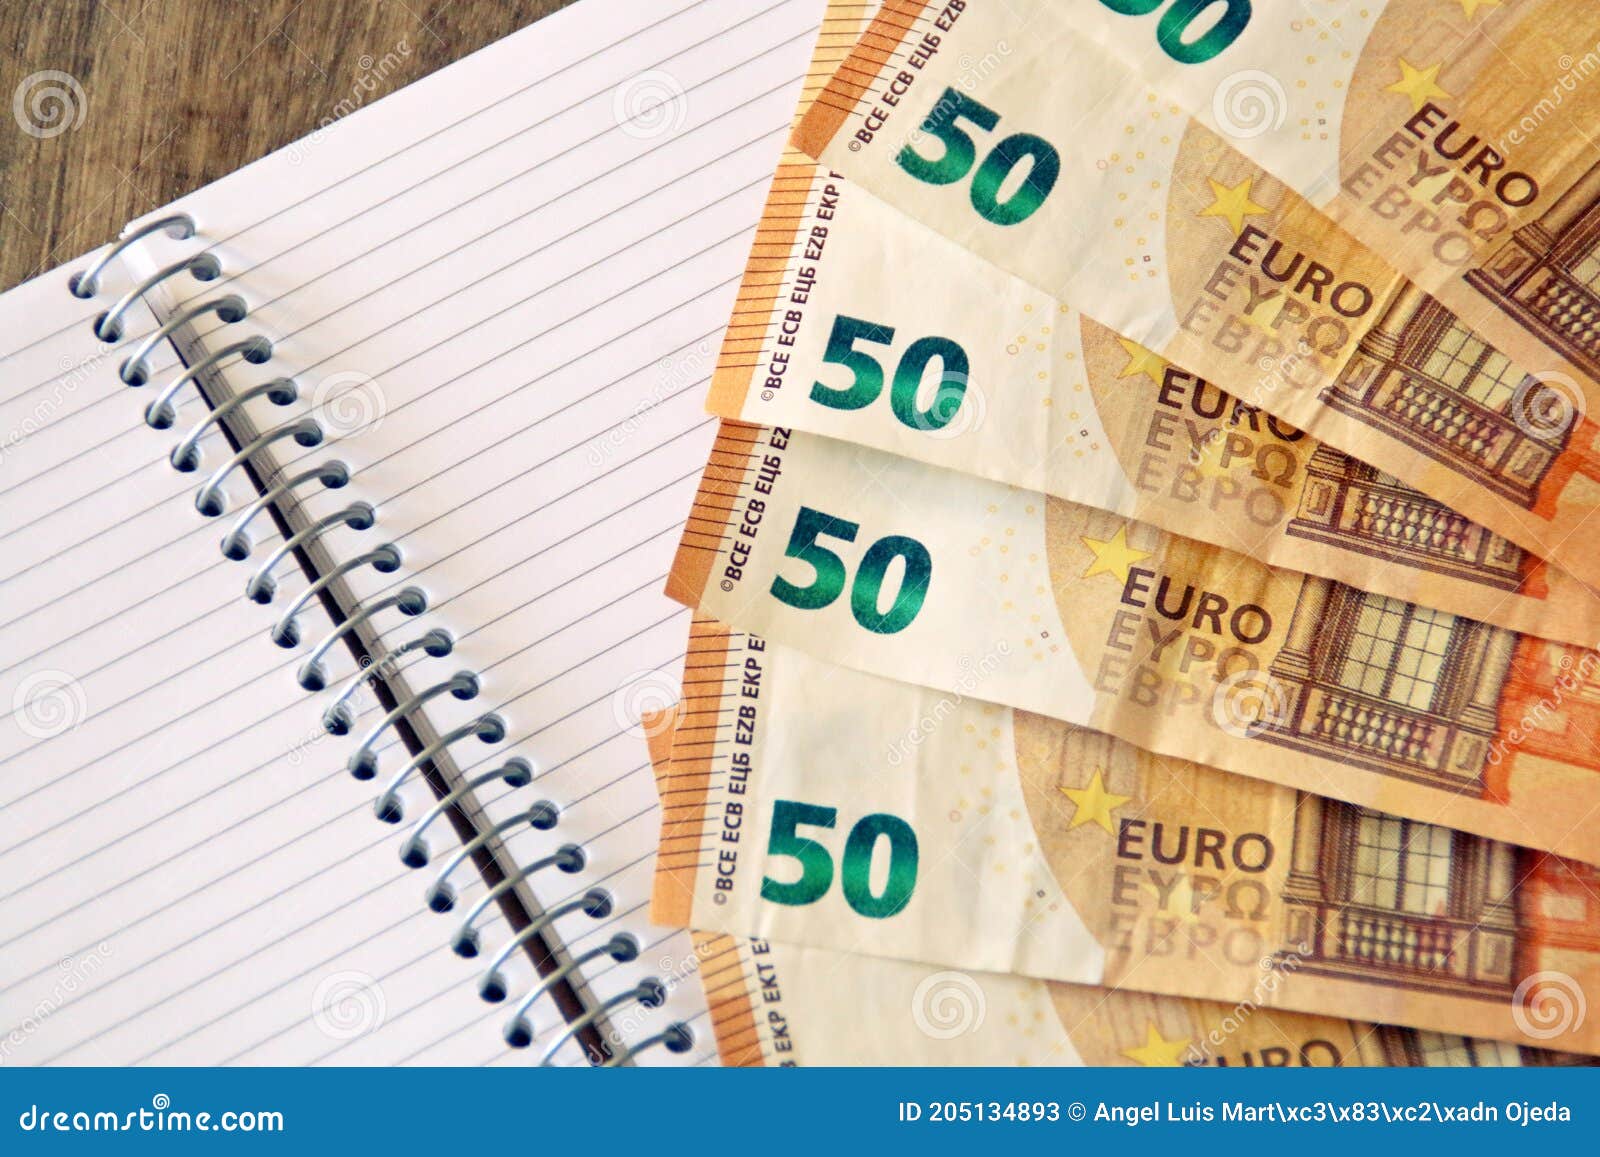 uitvinden Tactiel gevoel Glimmend Banknotes of 50 Euros and Notebook. Stock Image - Image of bill, banknote:  205134893